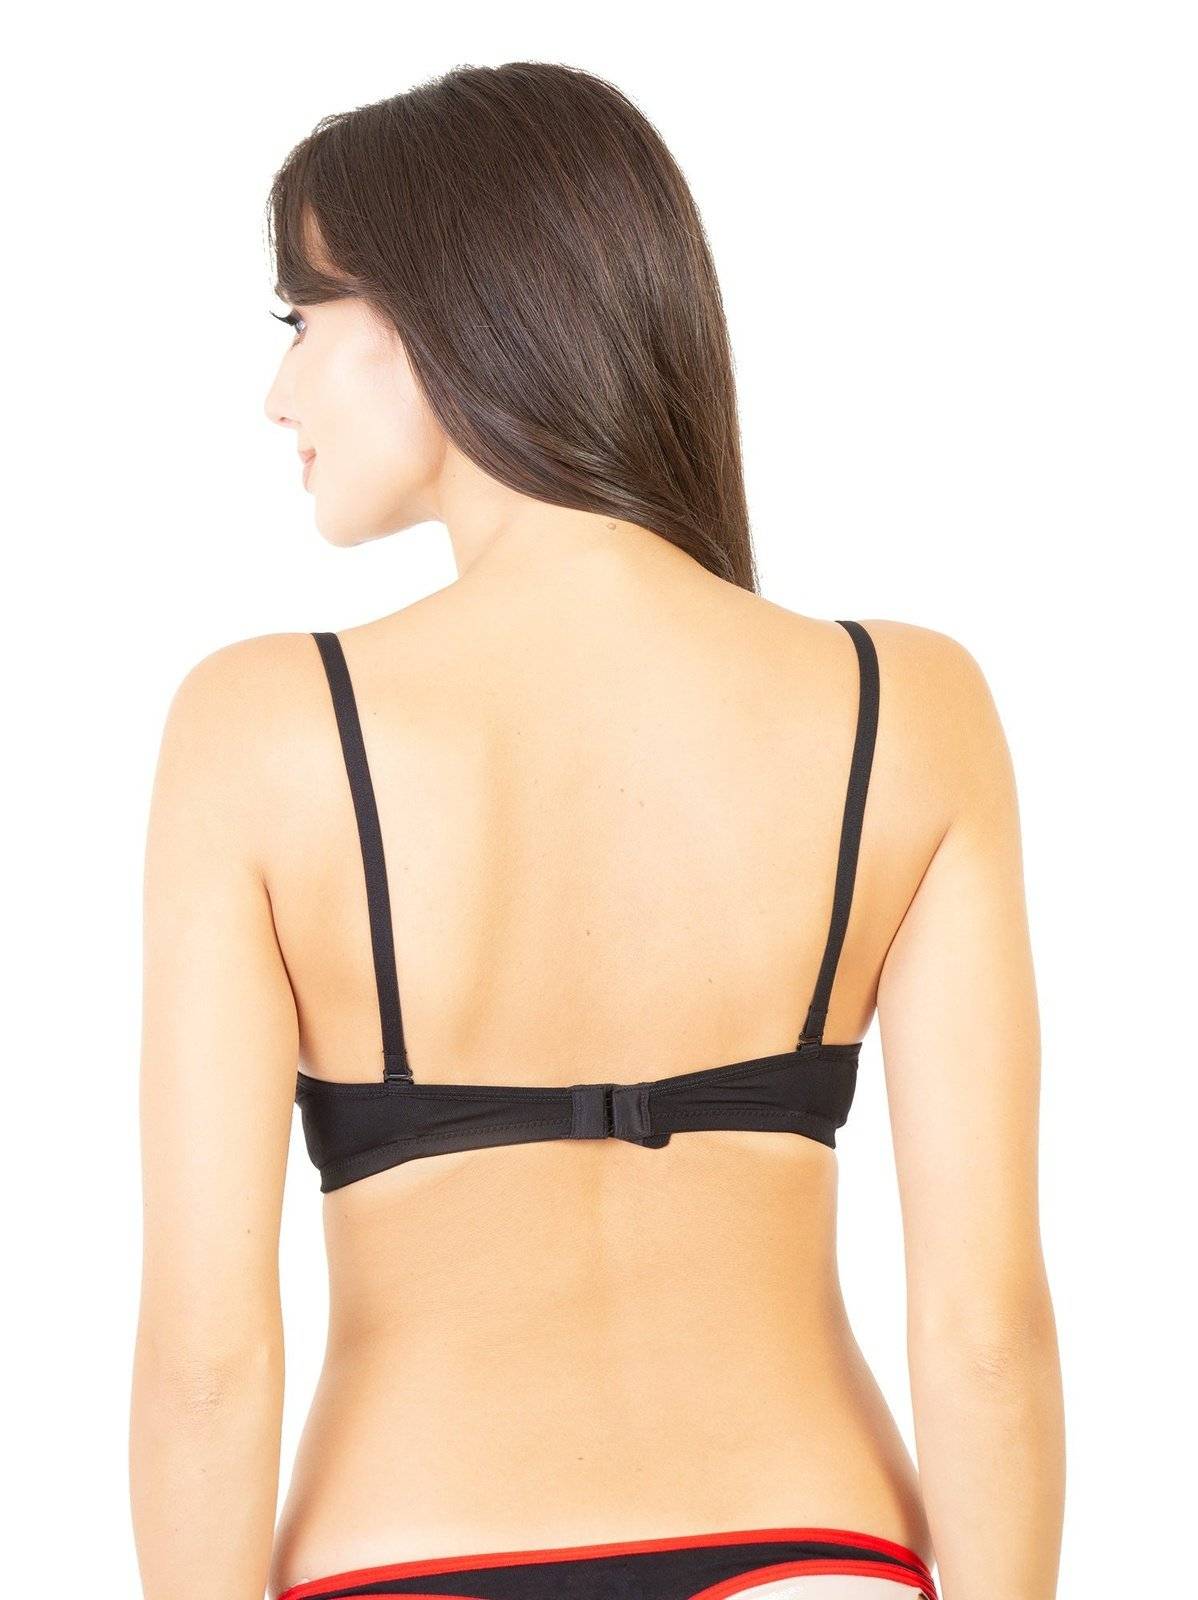 Lopecy-Sta Women Sexy Top Bra Wire Free Underwears Base Vest Style